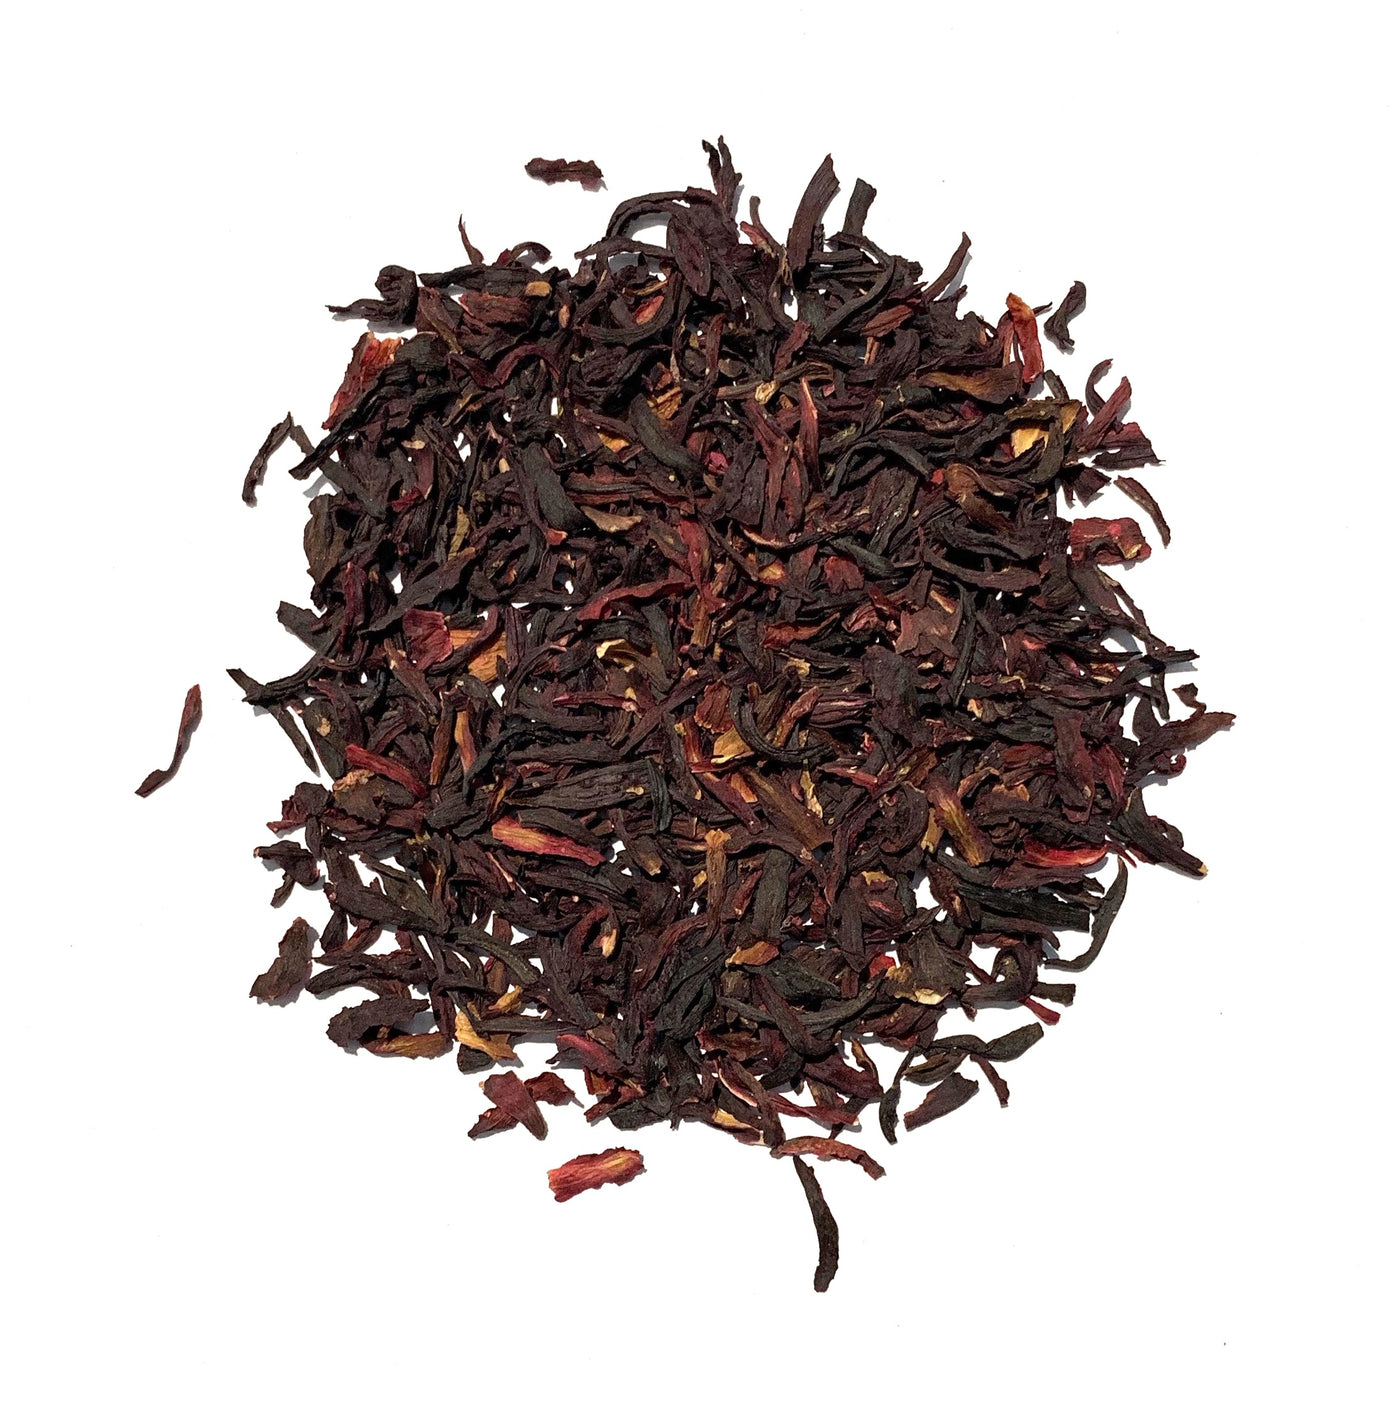 Positively Tea's Organic Hibiscus Tisane, Herbal Tea, Loose Leaf